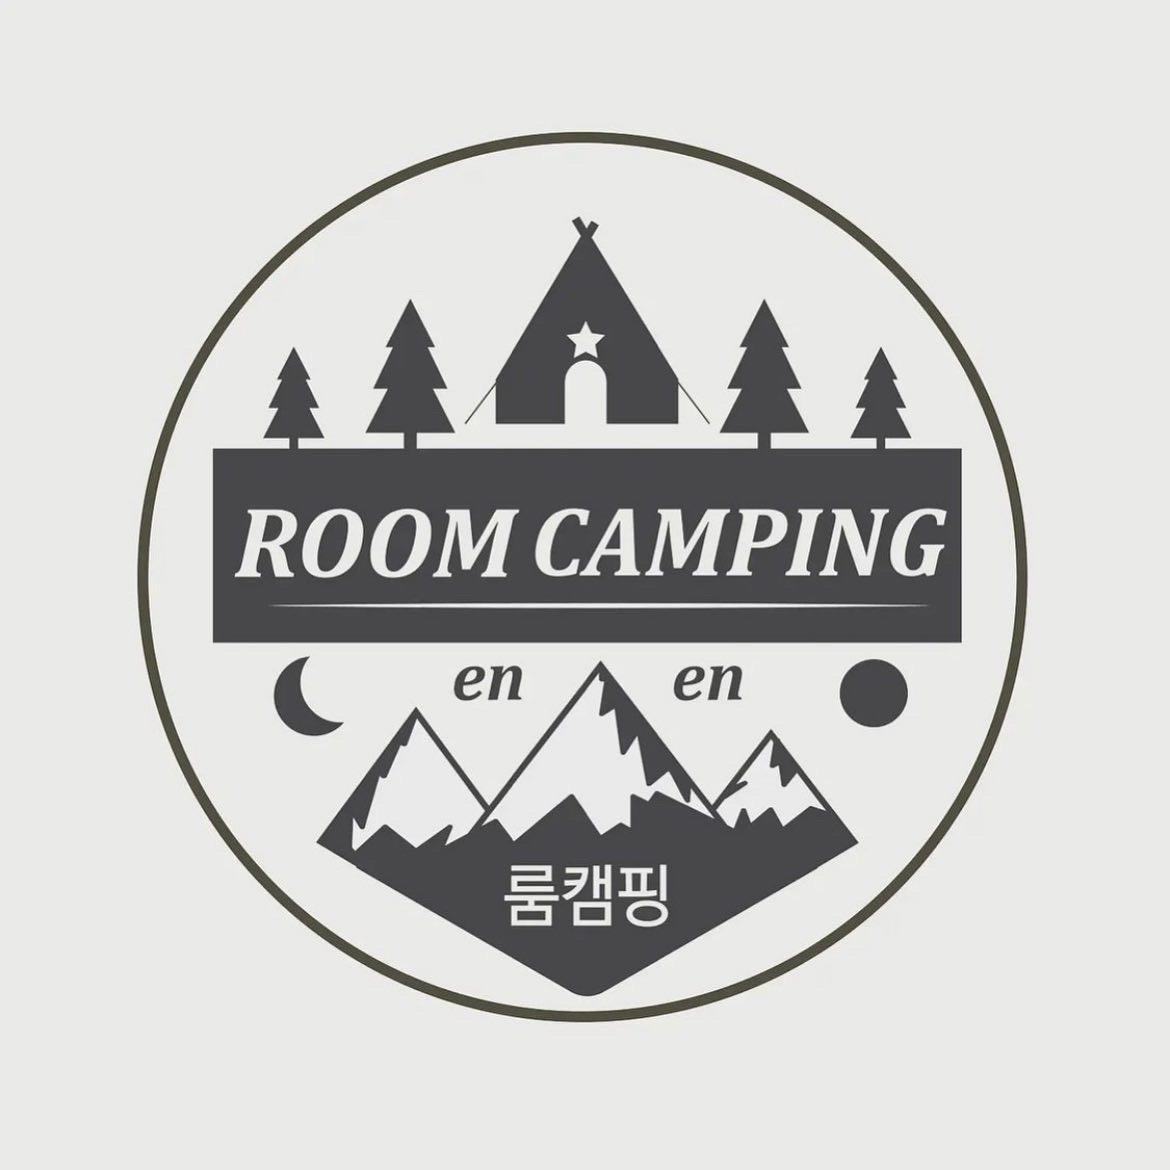 ROOM CAMPING enen Logo